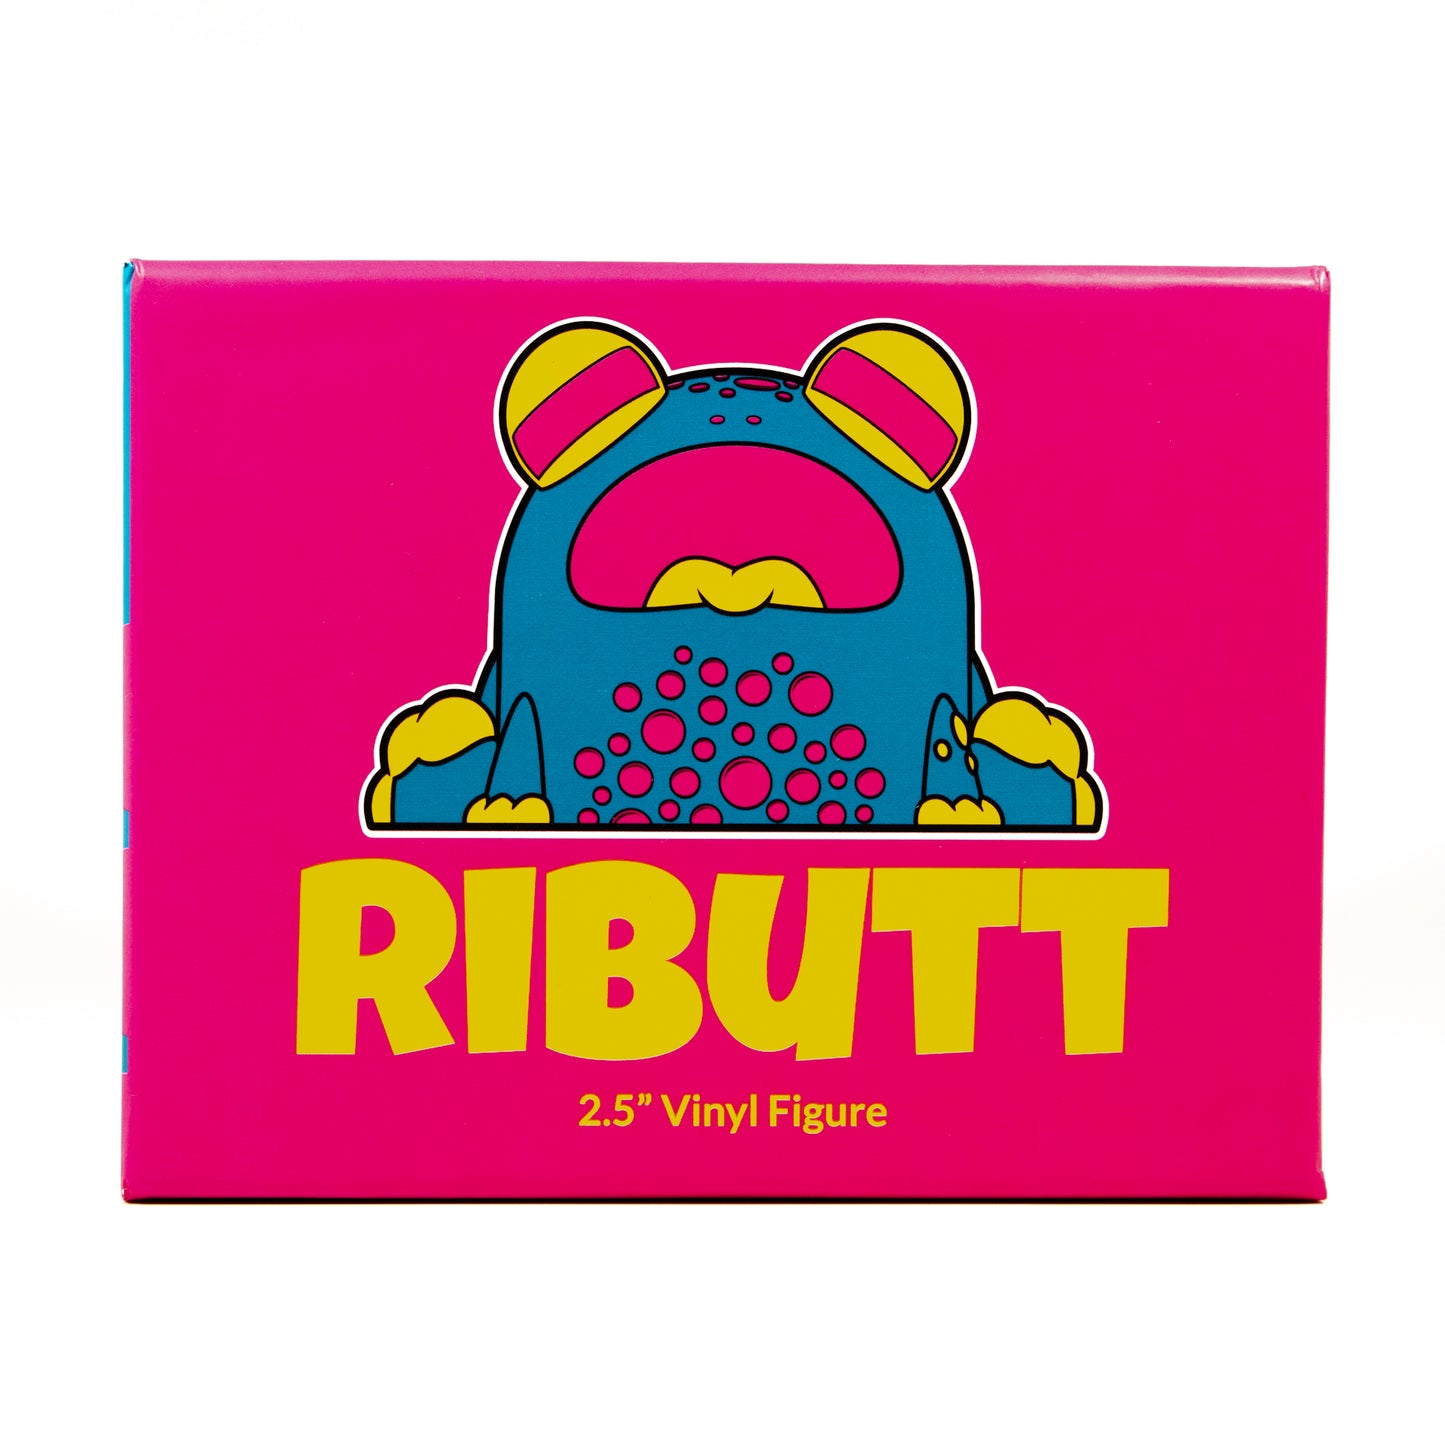 Ributt Acidic Limited Edition Vinyl Figure